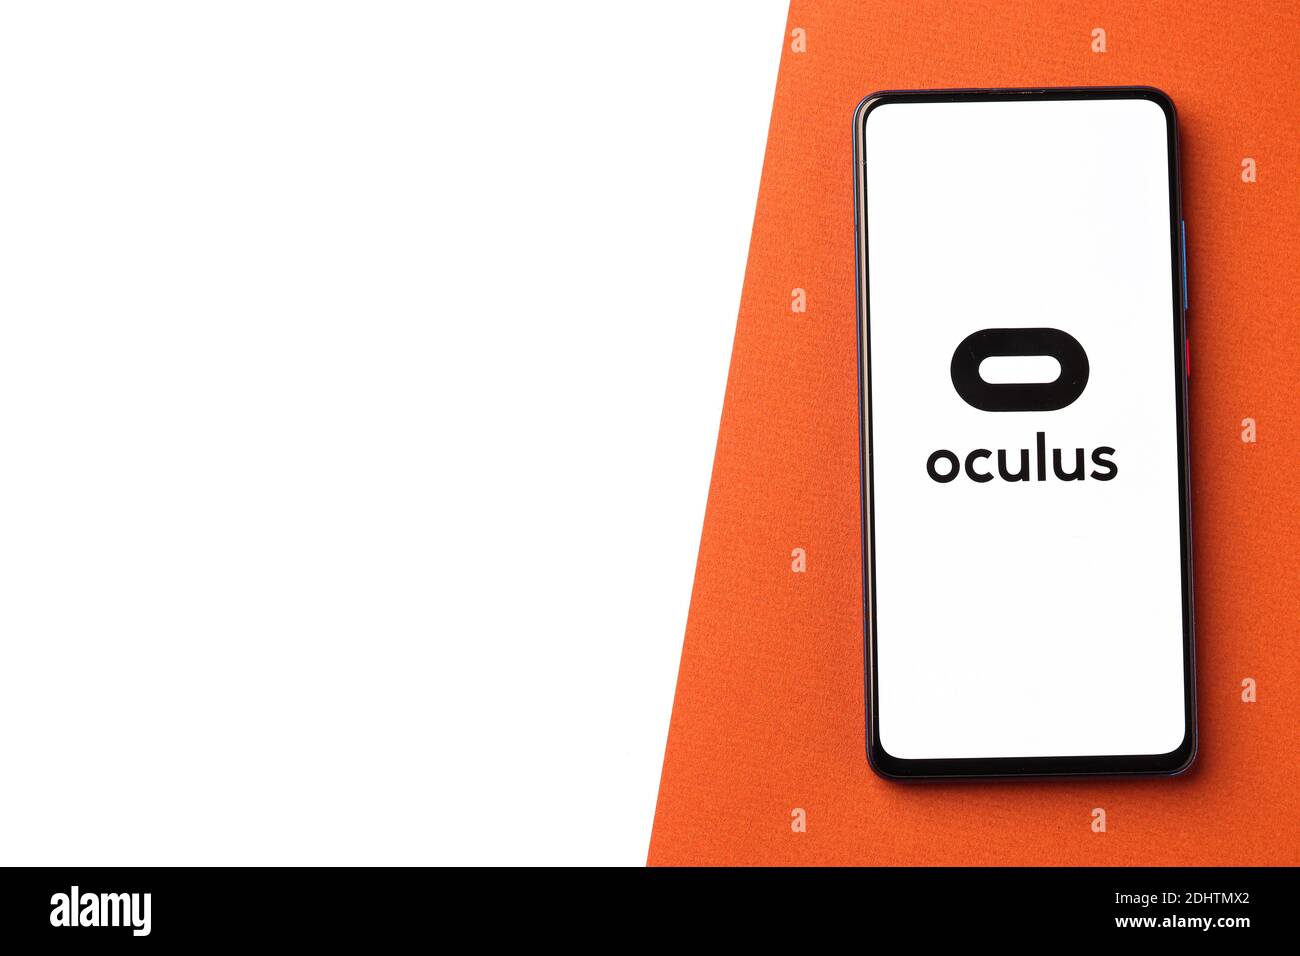 Assam, india - December 20, 2020 : Oculus logo on phone screen stock image. Stock Photo